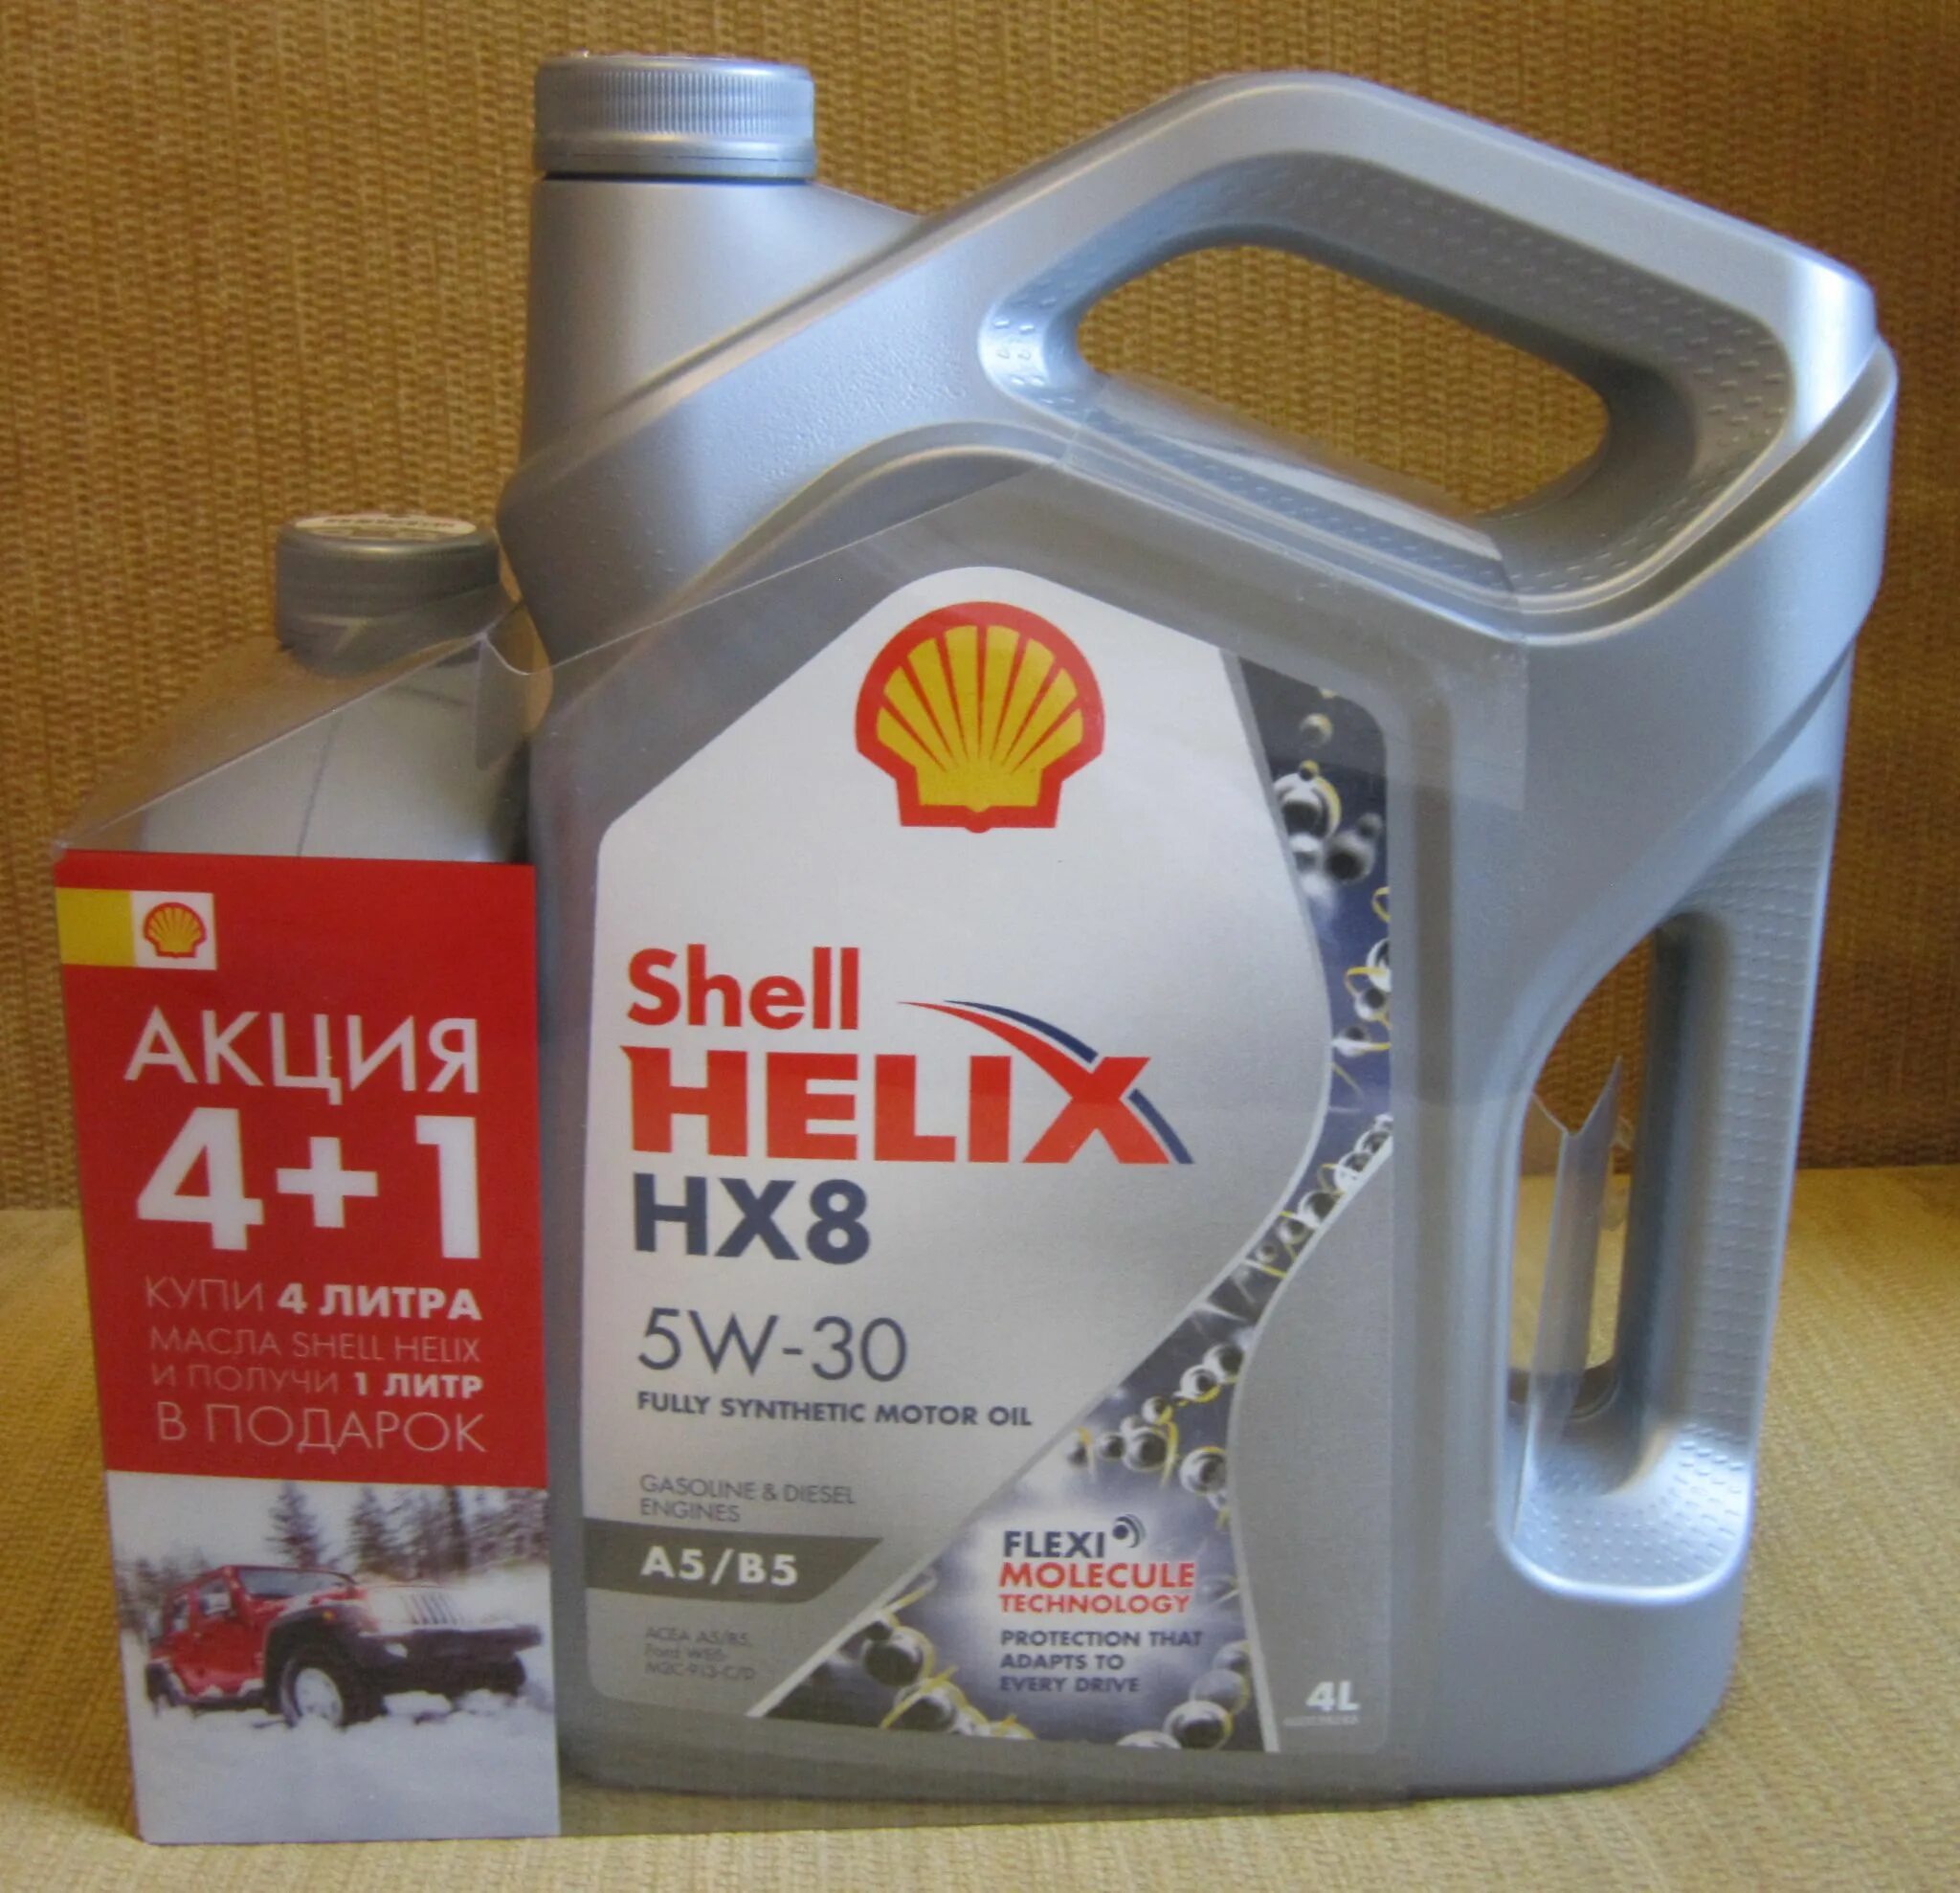 Shell hx8 5w30. Shell hx8 5w30 a5/b5. Моторное масло синтетическое Shell Helix hx8 a5/b5 5w-30. Моторное масло Shell Helix hx8 a5/b5 5w-30 синтетическое 4 л. Масло моторное 5w30 hx8